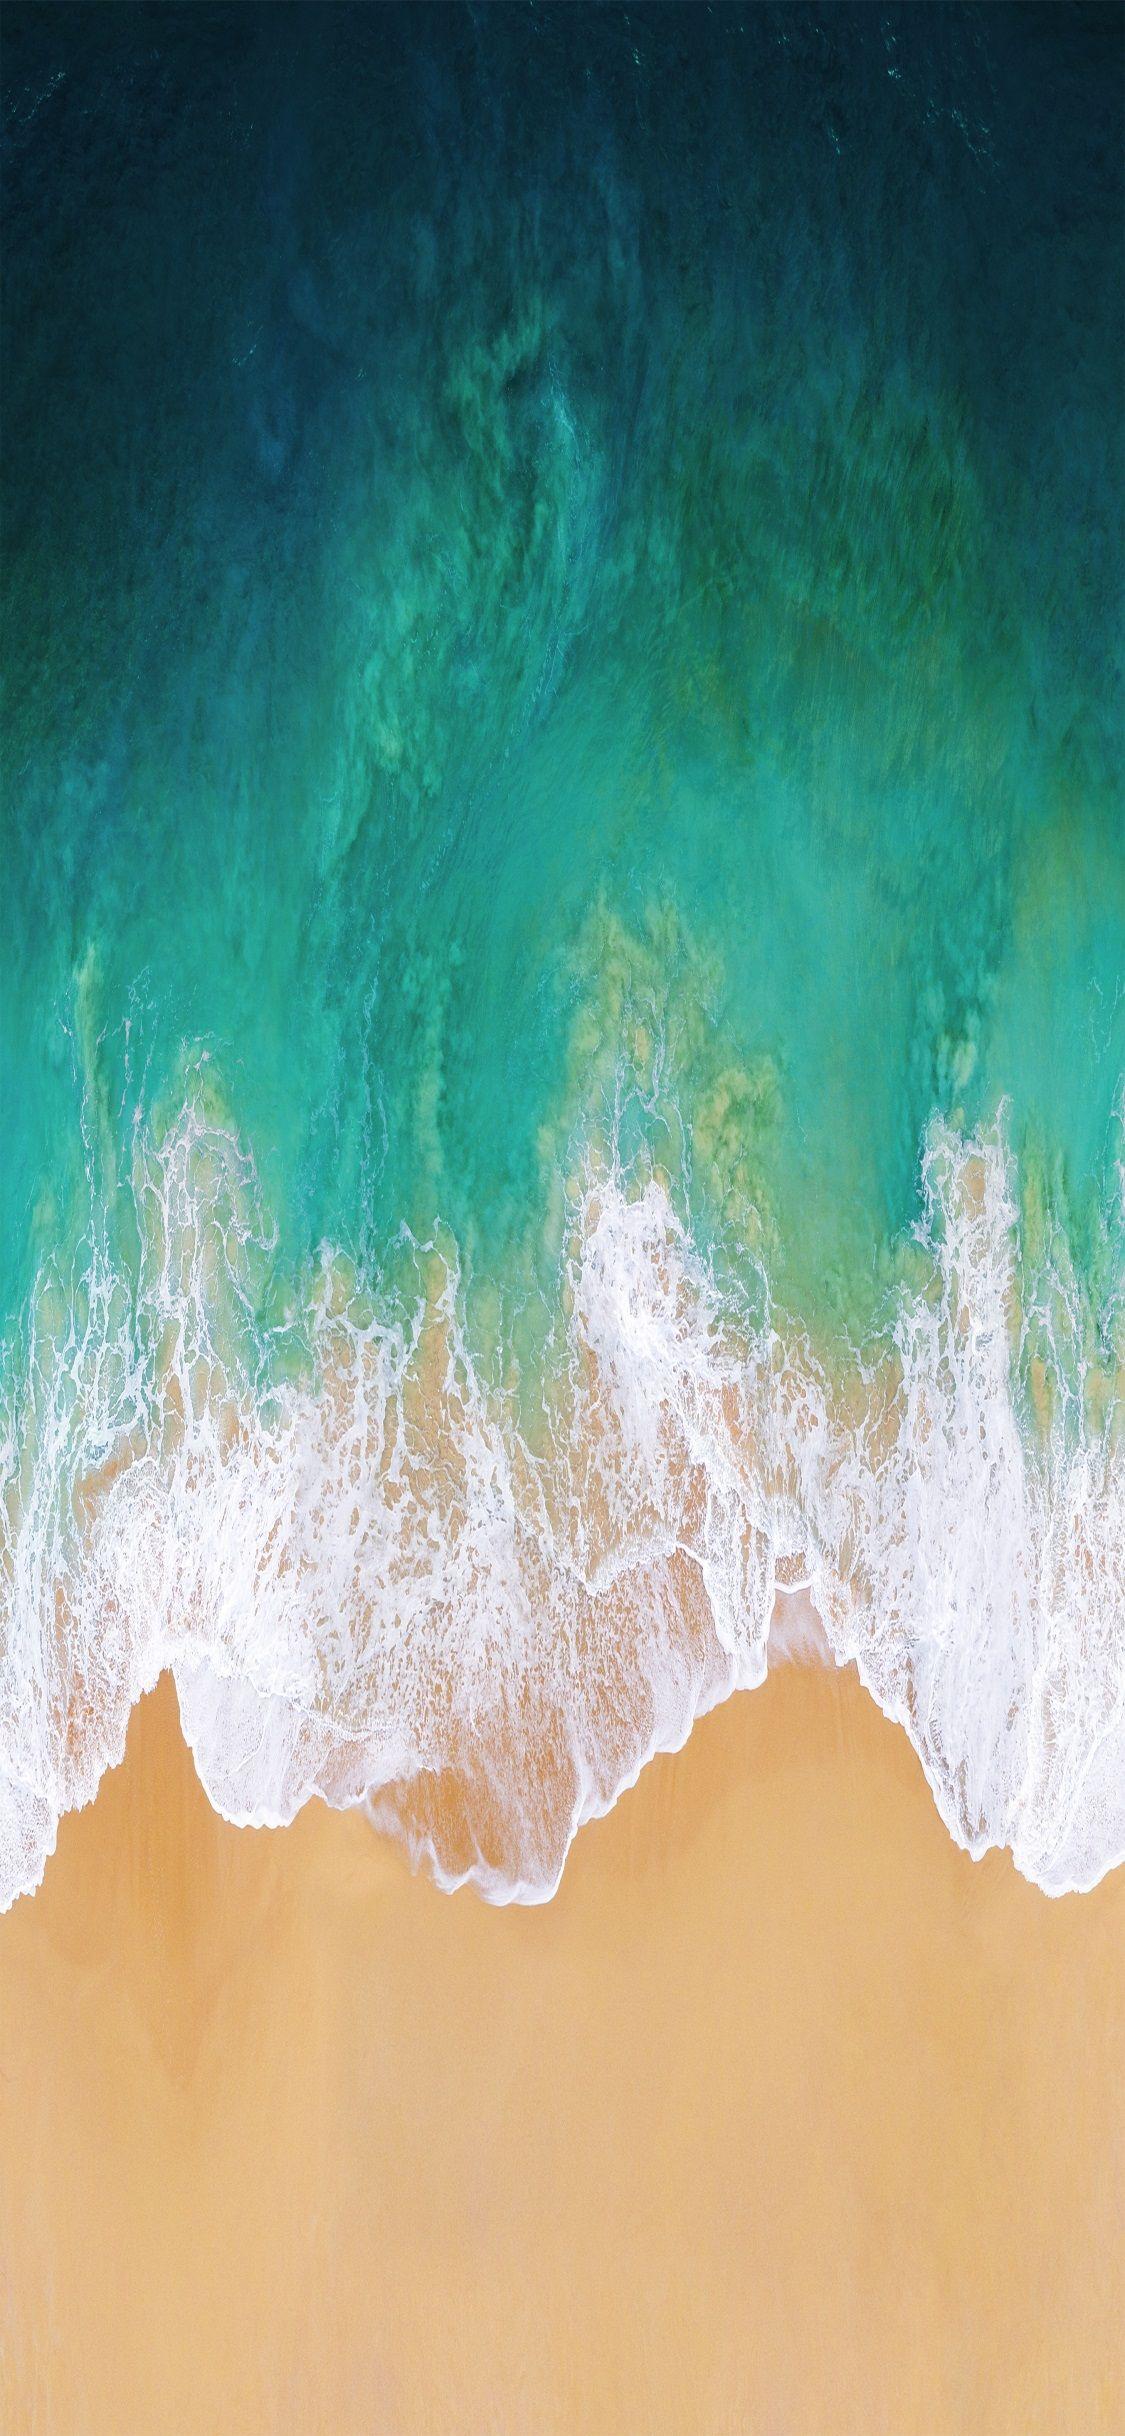 iPhone X Default Wallpapers Top Free iPhone X Default Backgrounds 